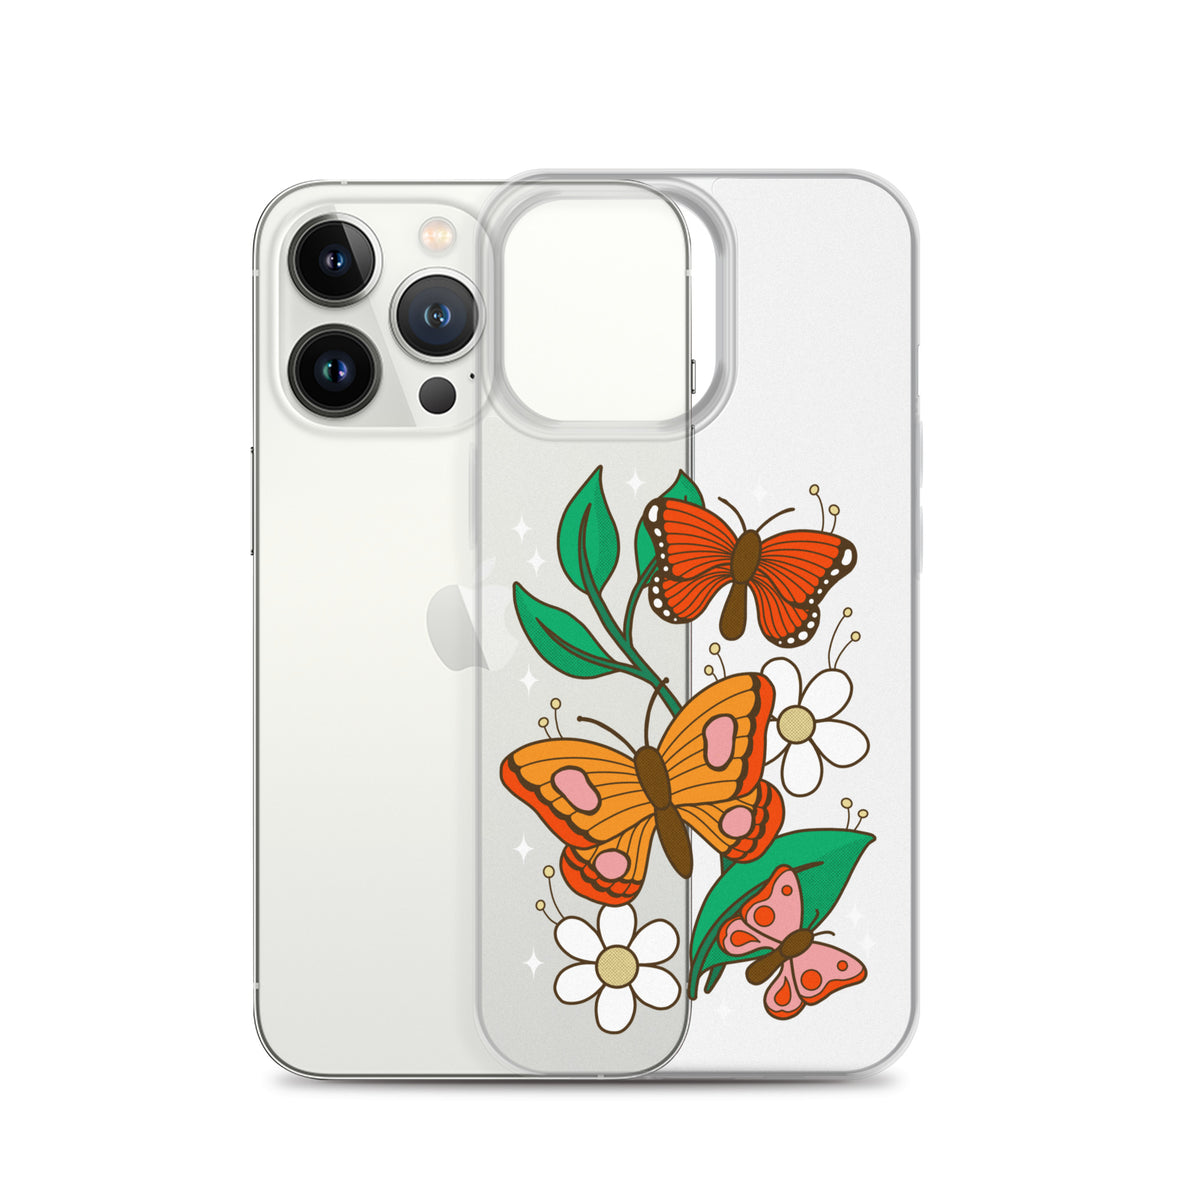 Retro Butterflies iPhone Case